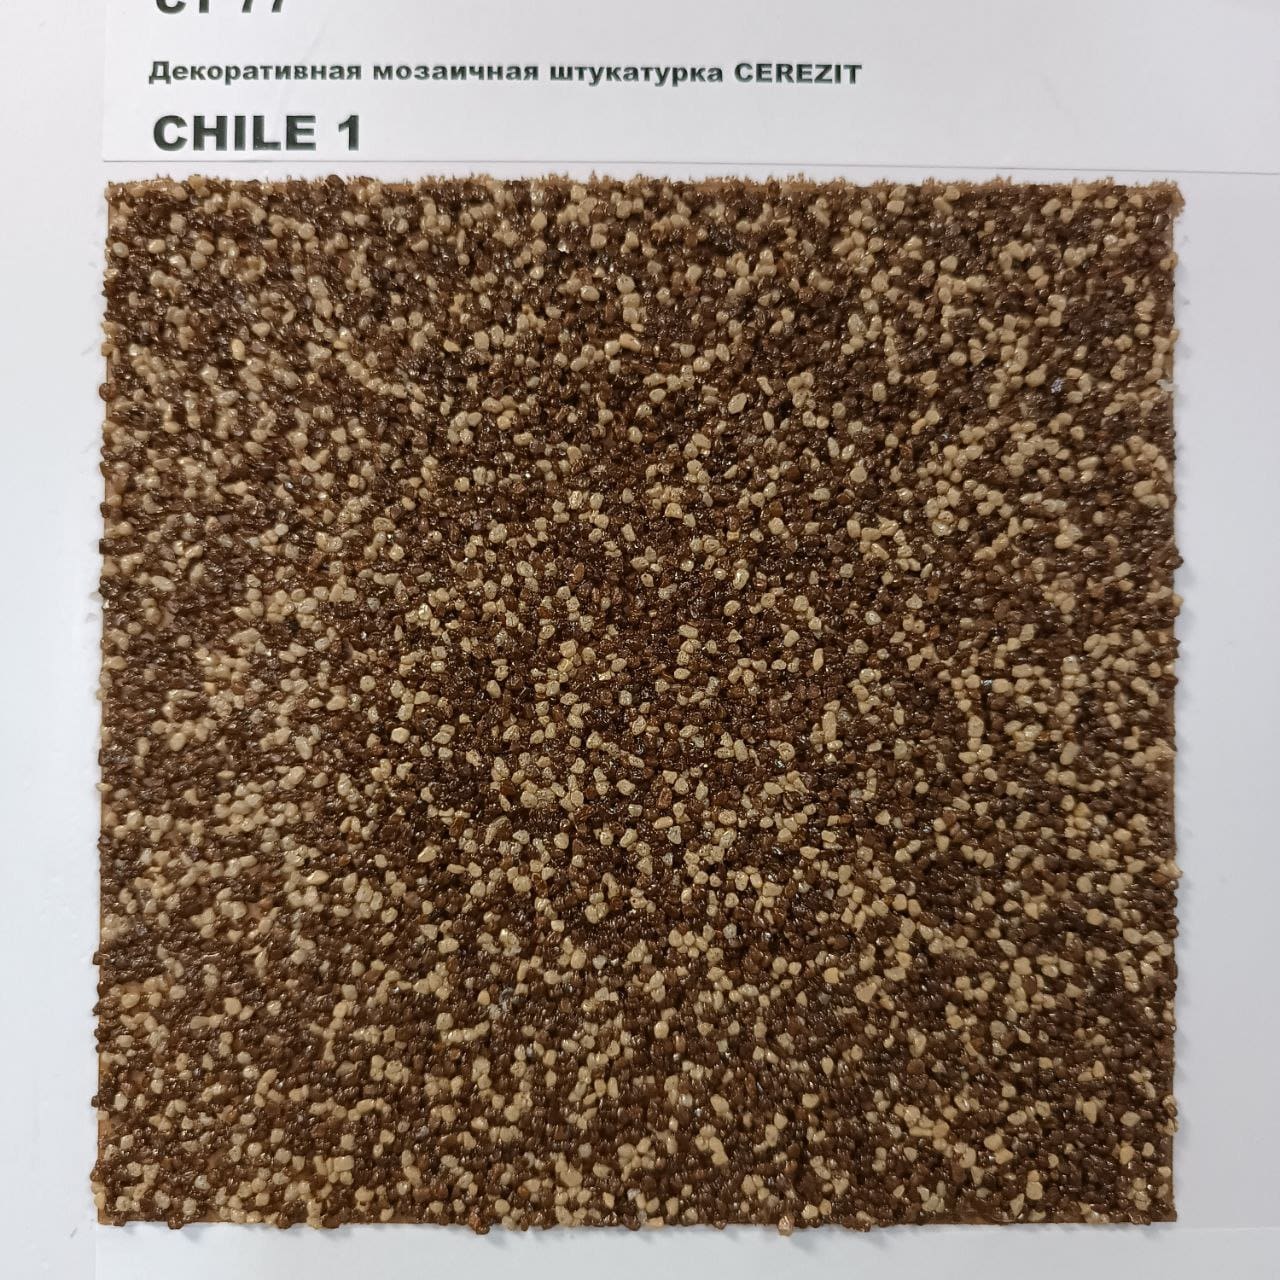 Мозаичная декоративная штукатурка Ceresit CT 77 Chile 1 (1,4-2,0) 25 кг